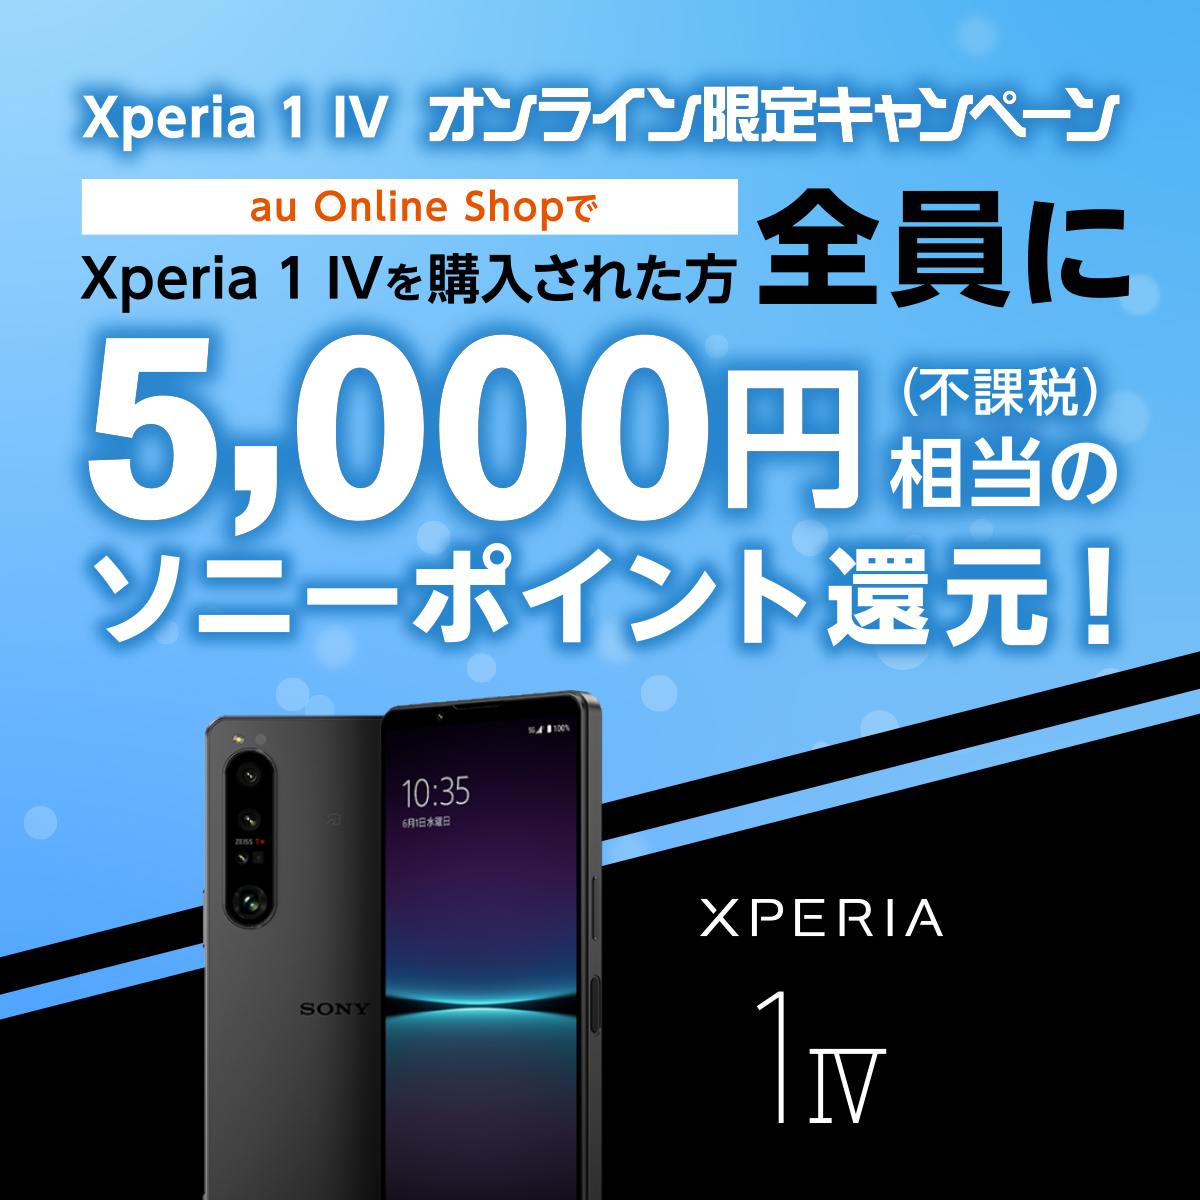 au Xperia 1 IV オンライン限定キャンペーン | Xperia (エクスペリア ...